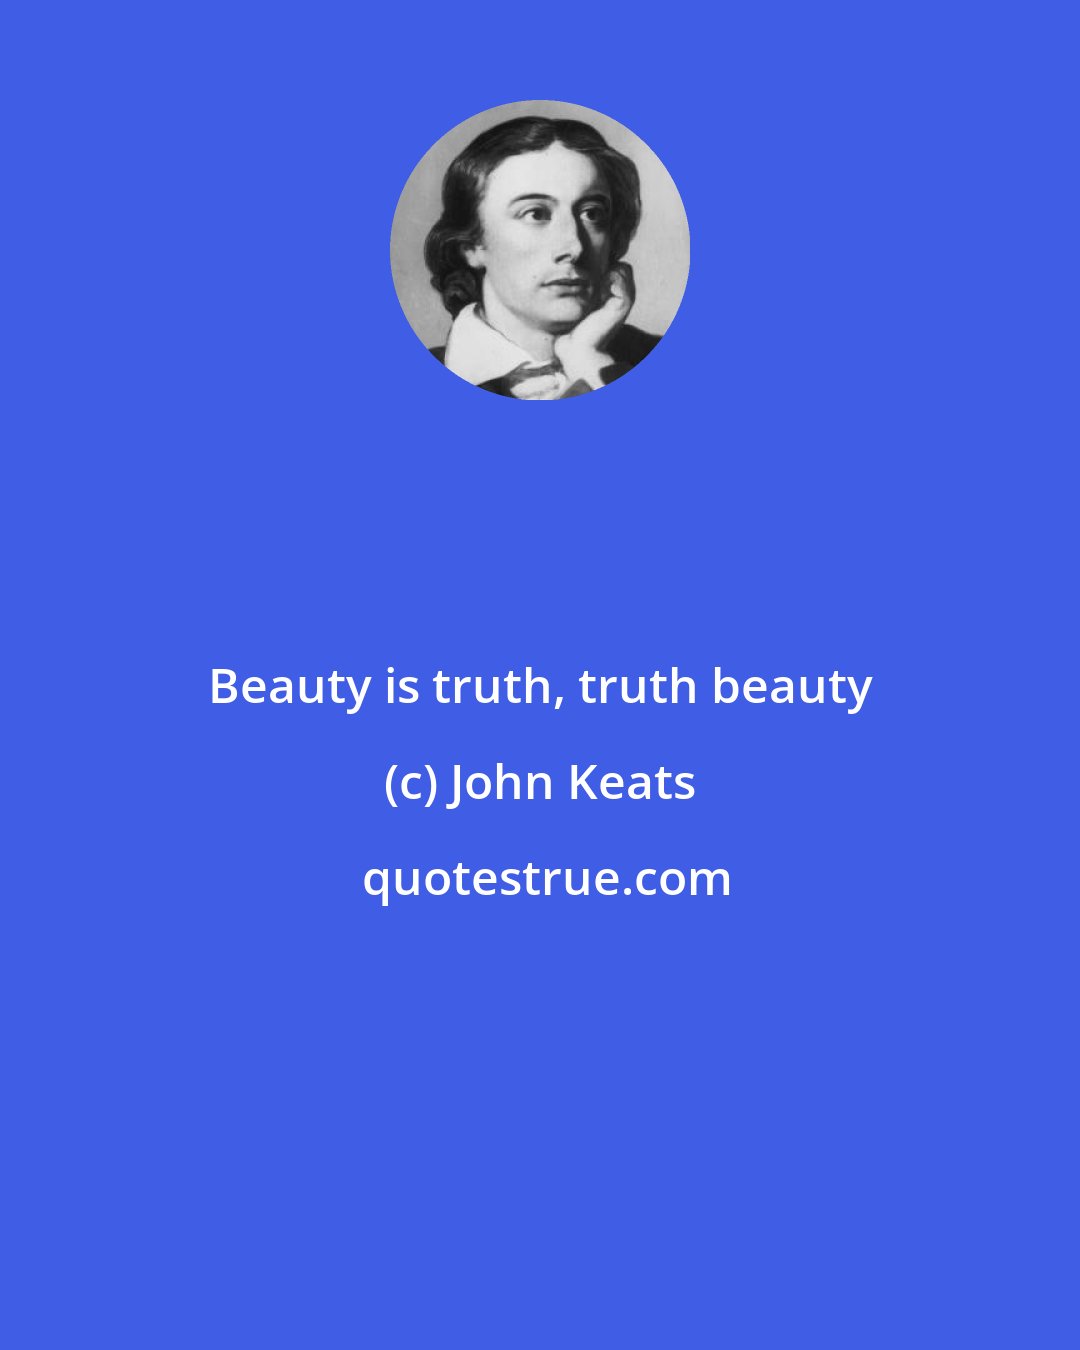 John Keats: Beauty is truth, truth beauty